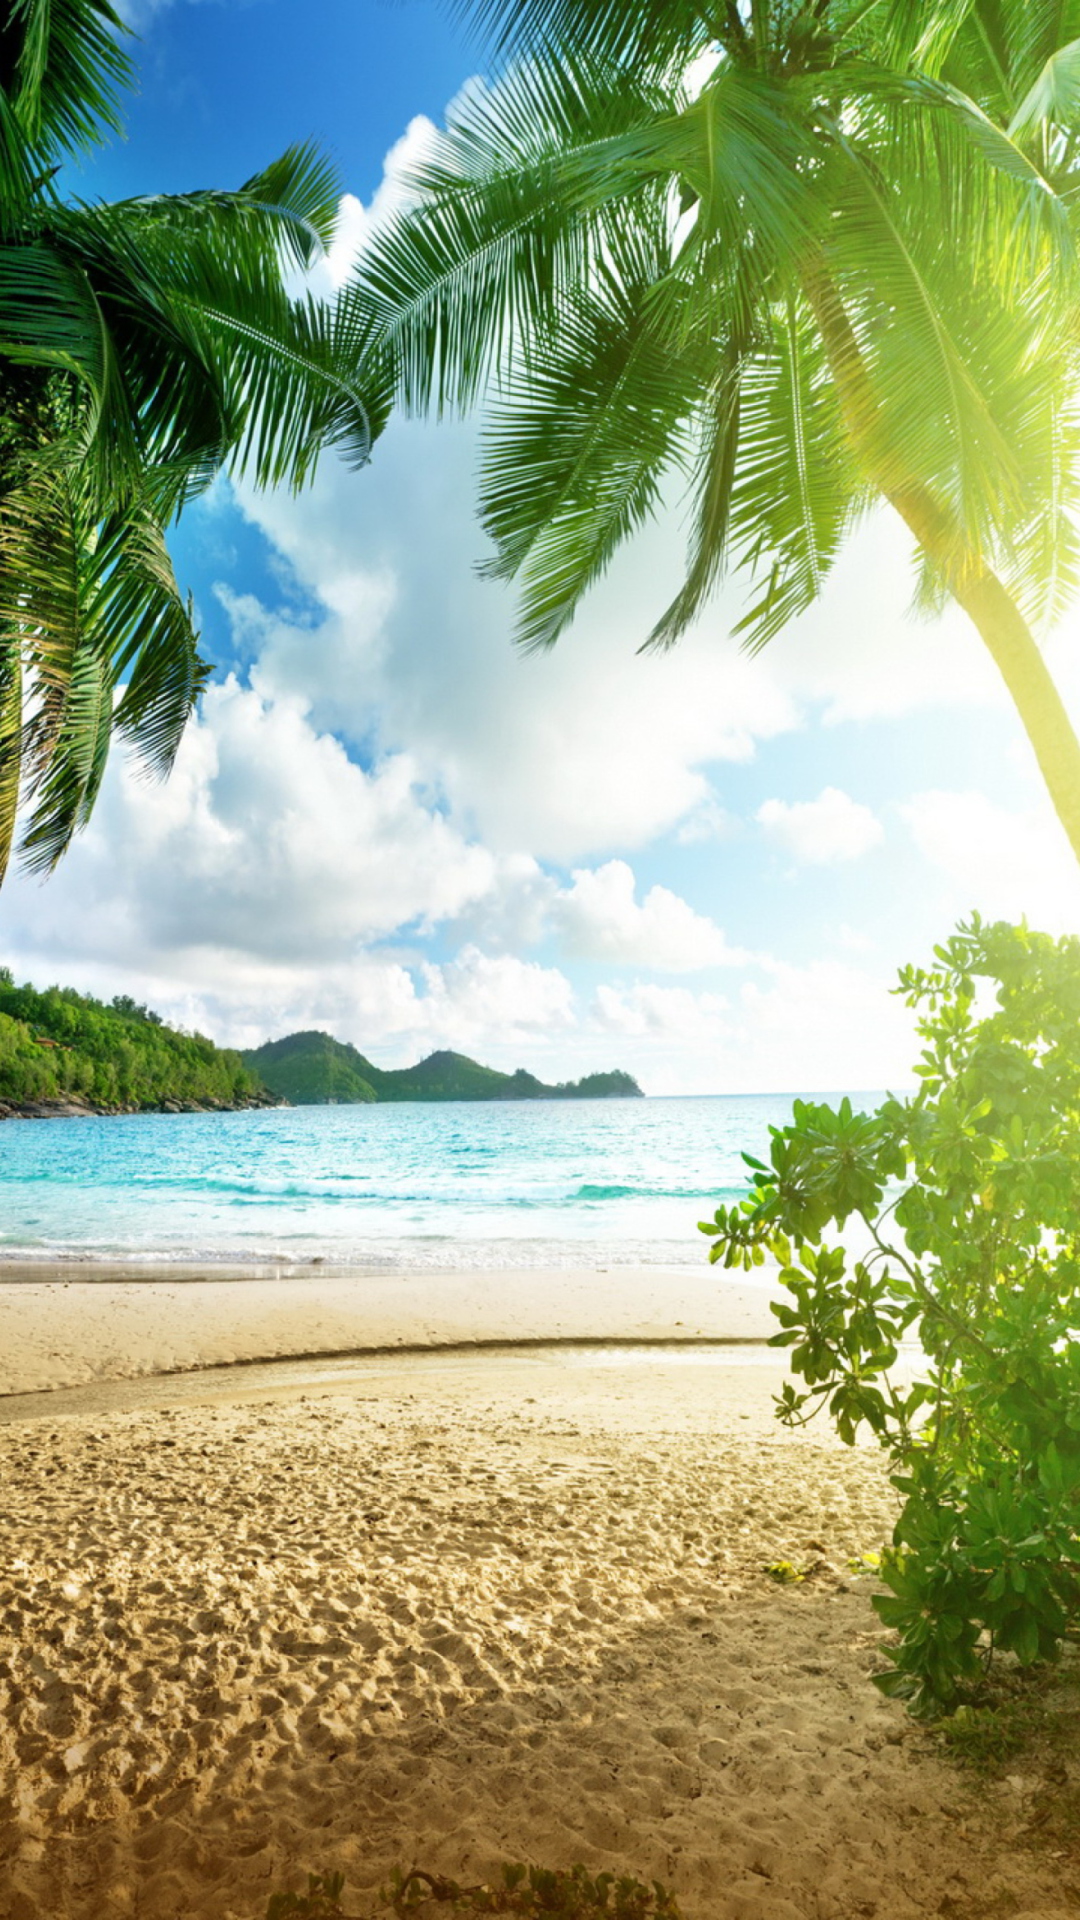 Tropical Beach In Palau Wallpaper for iPhone 6 Plus